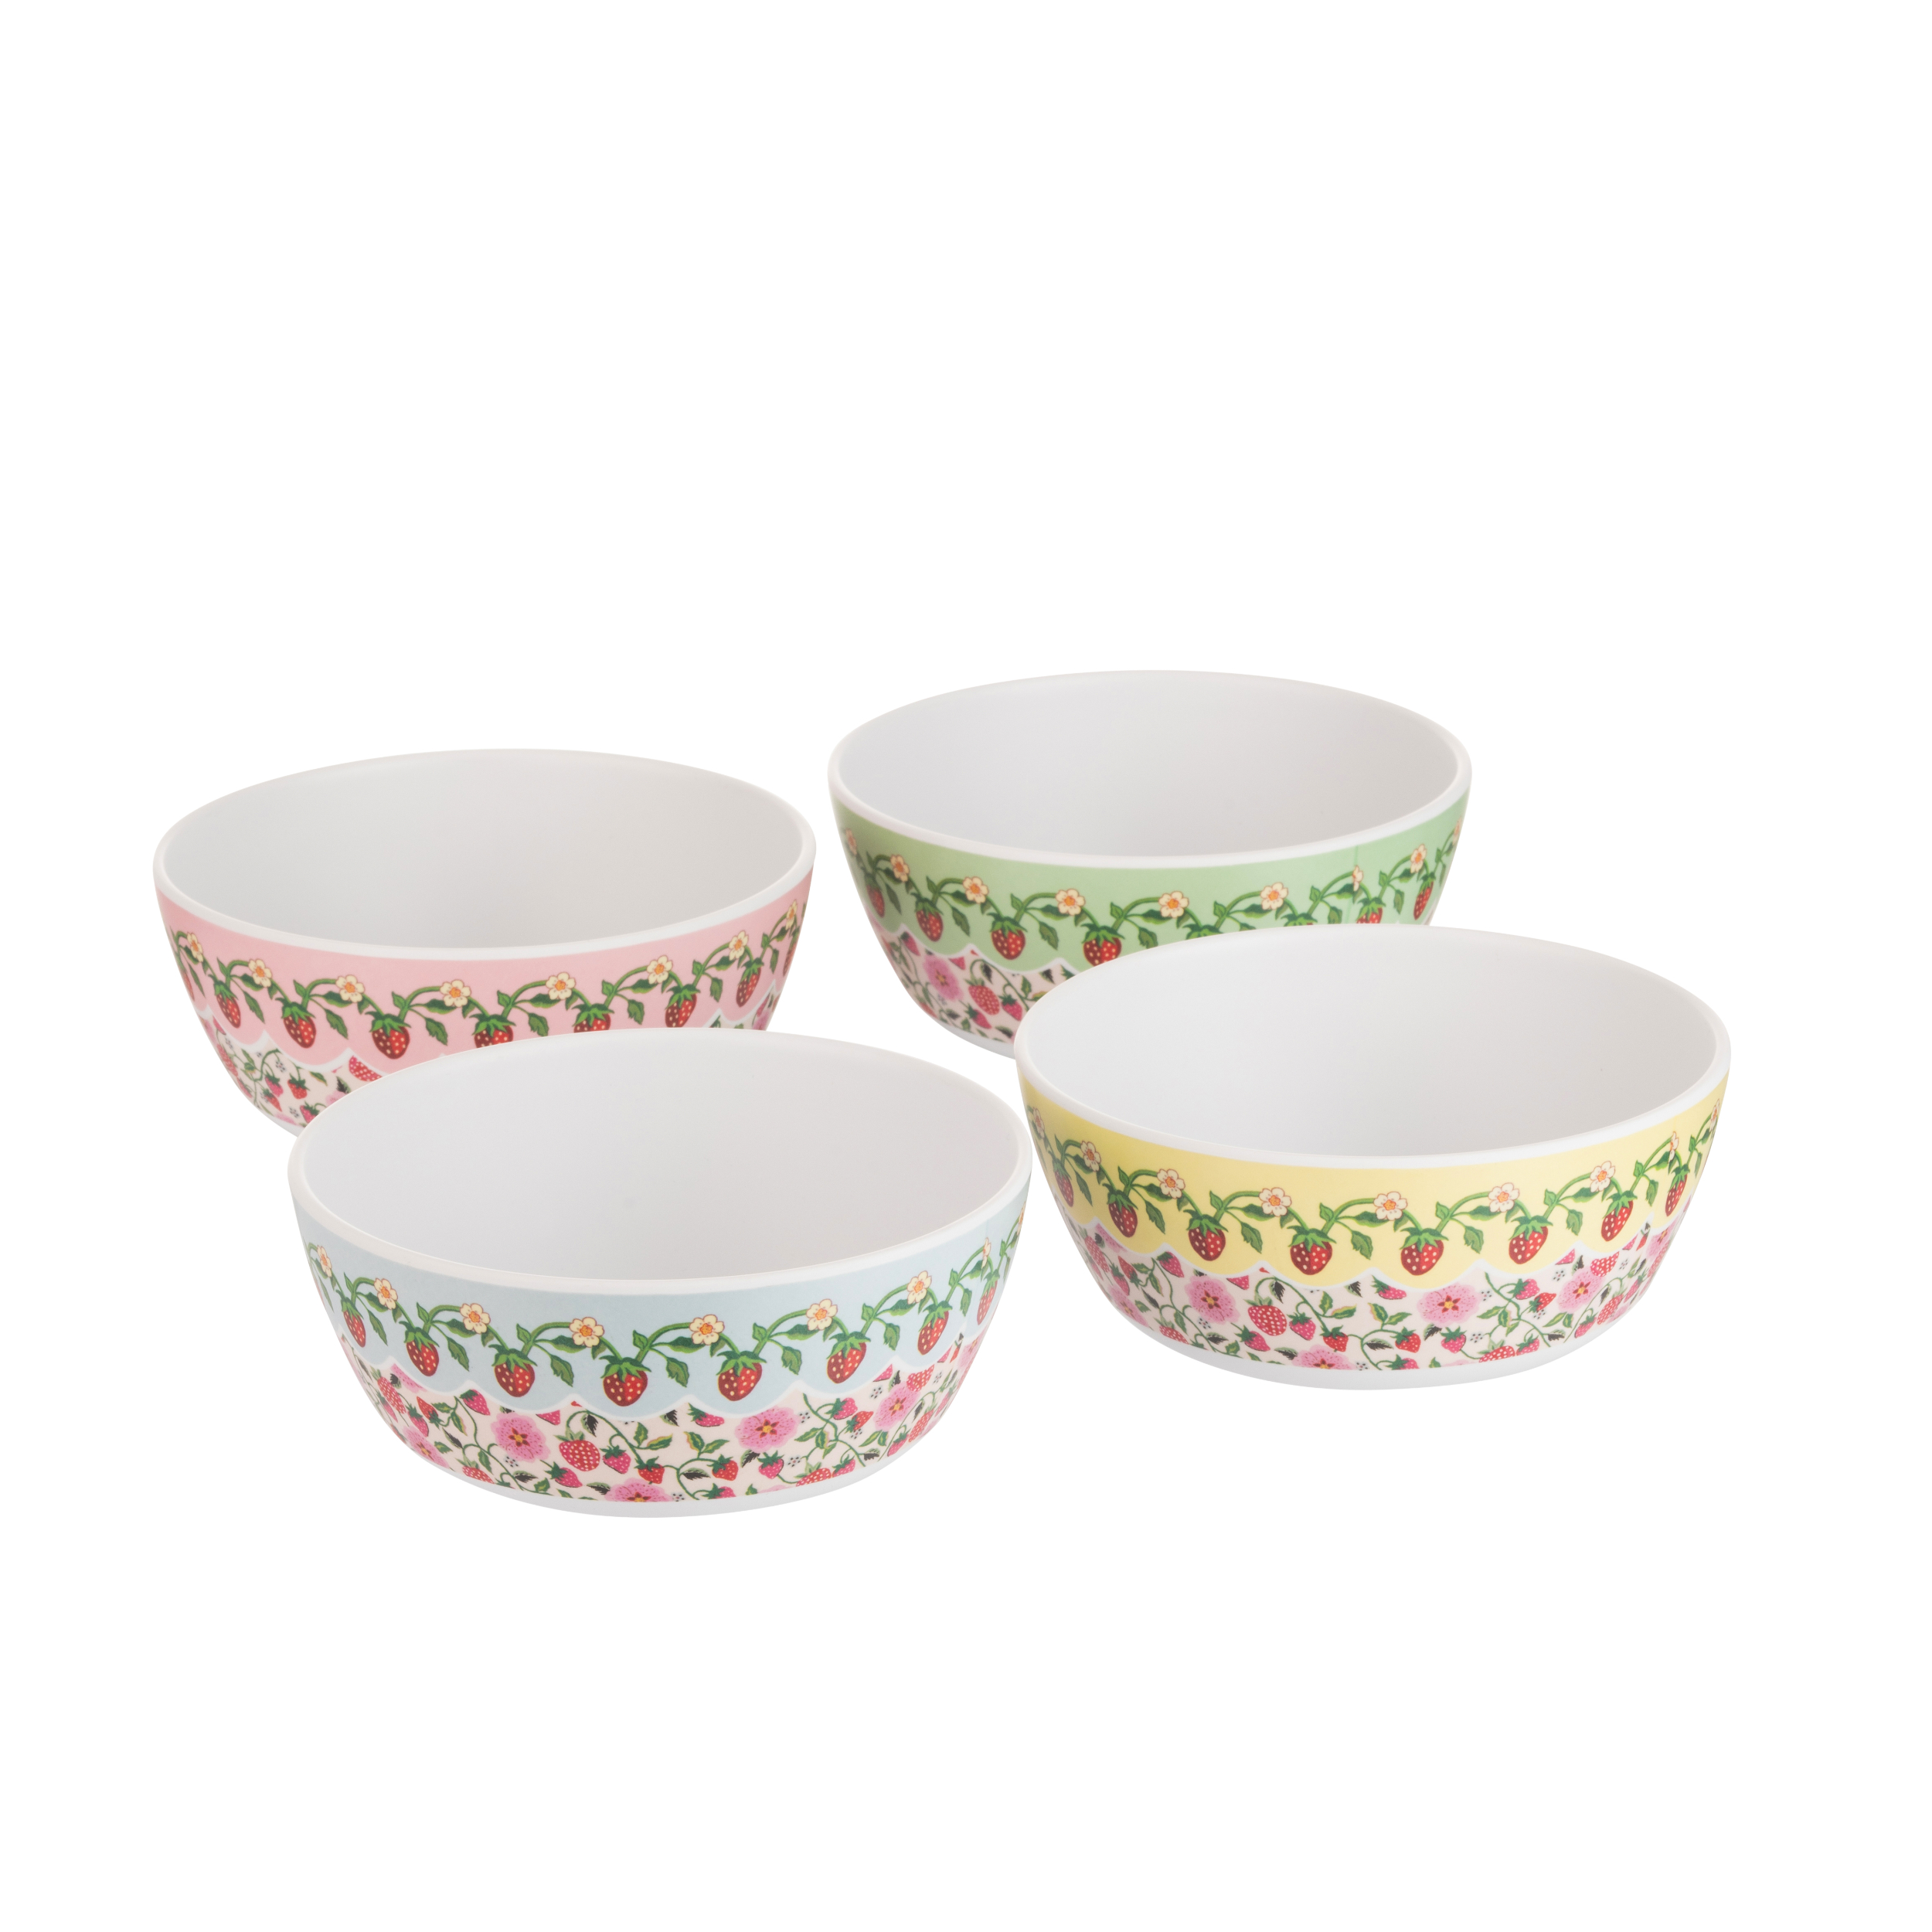 Cath Kidston Strawberry Picnic Melamine Cereal Bowls - Set of 4